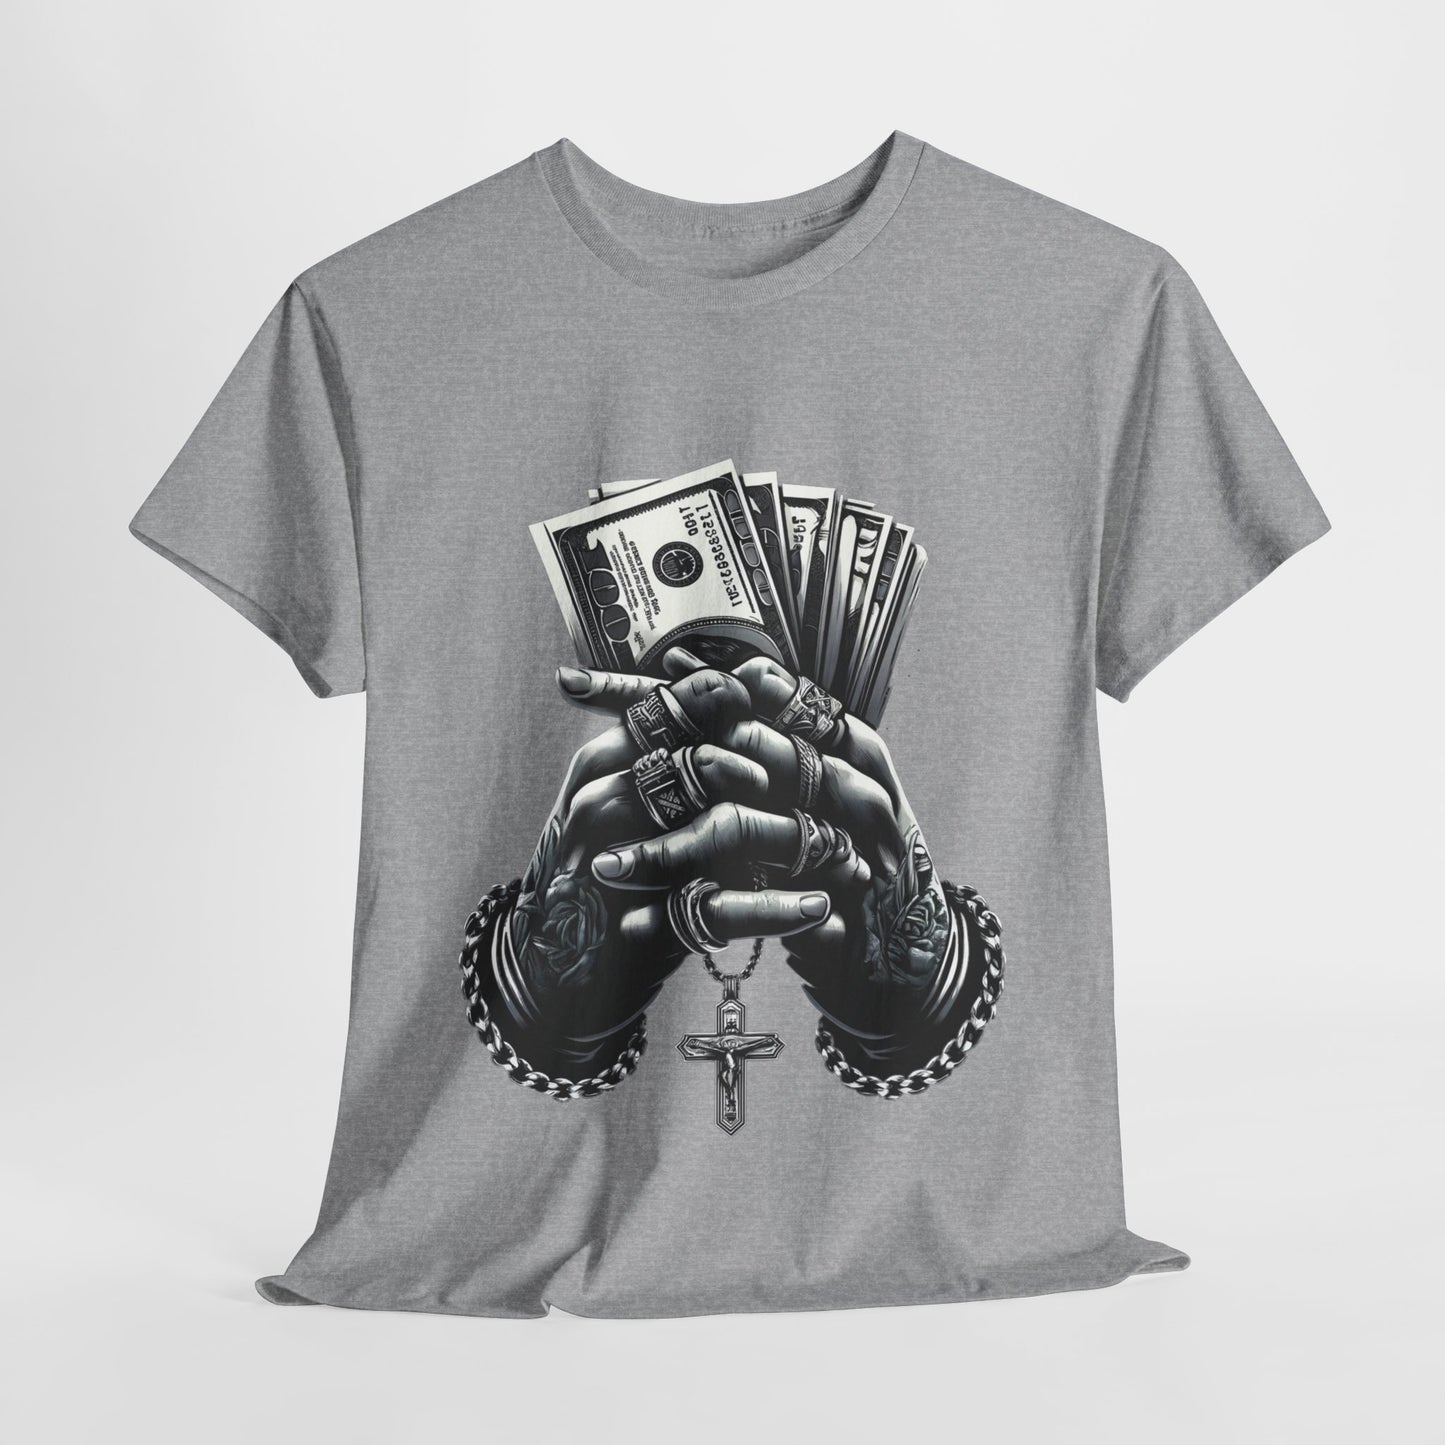 Y.M.L.Y. "Power & Faith" T-Shirt The Money Way T-Shirt Urban T-Shirt Street Wear Ballers Wear Hip Hop Clothing